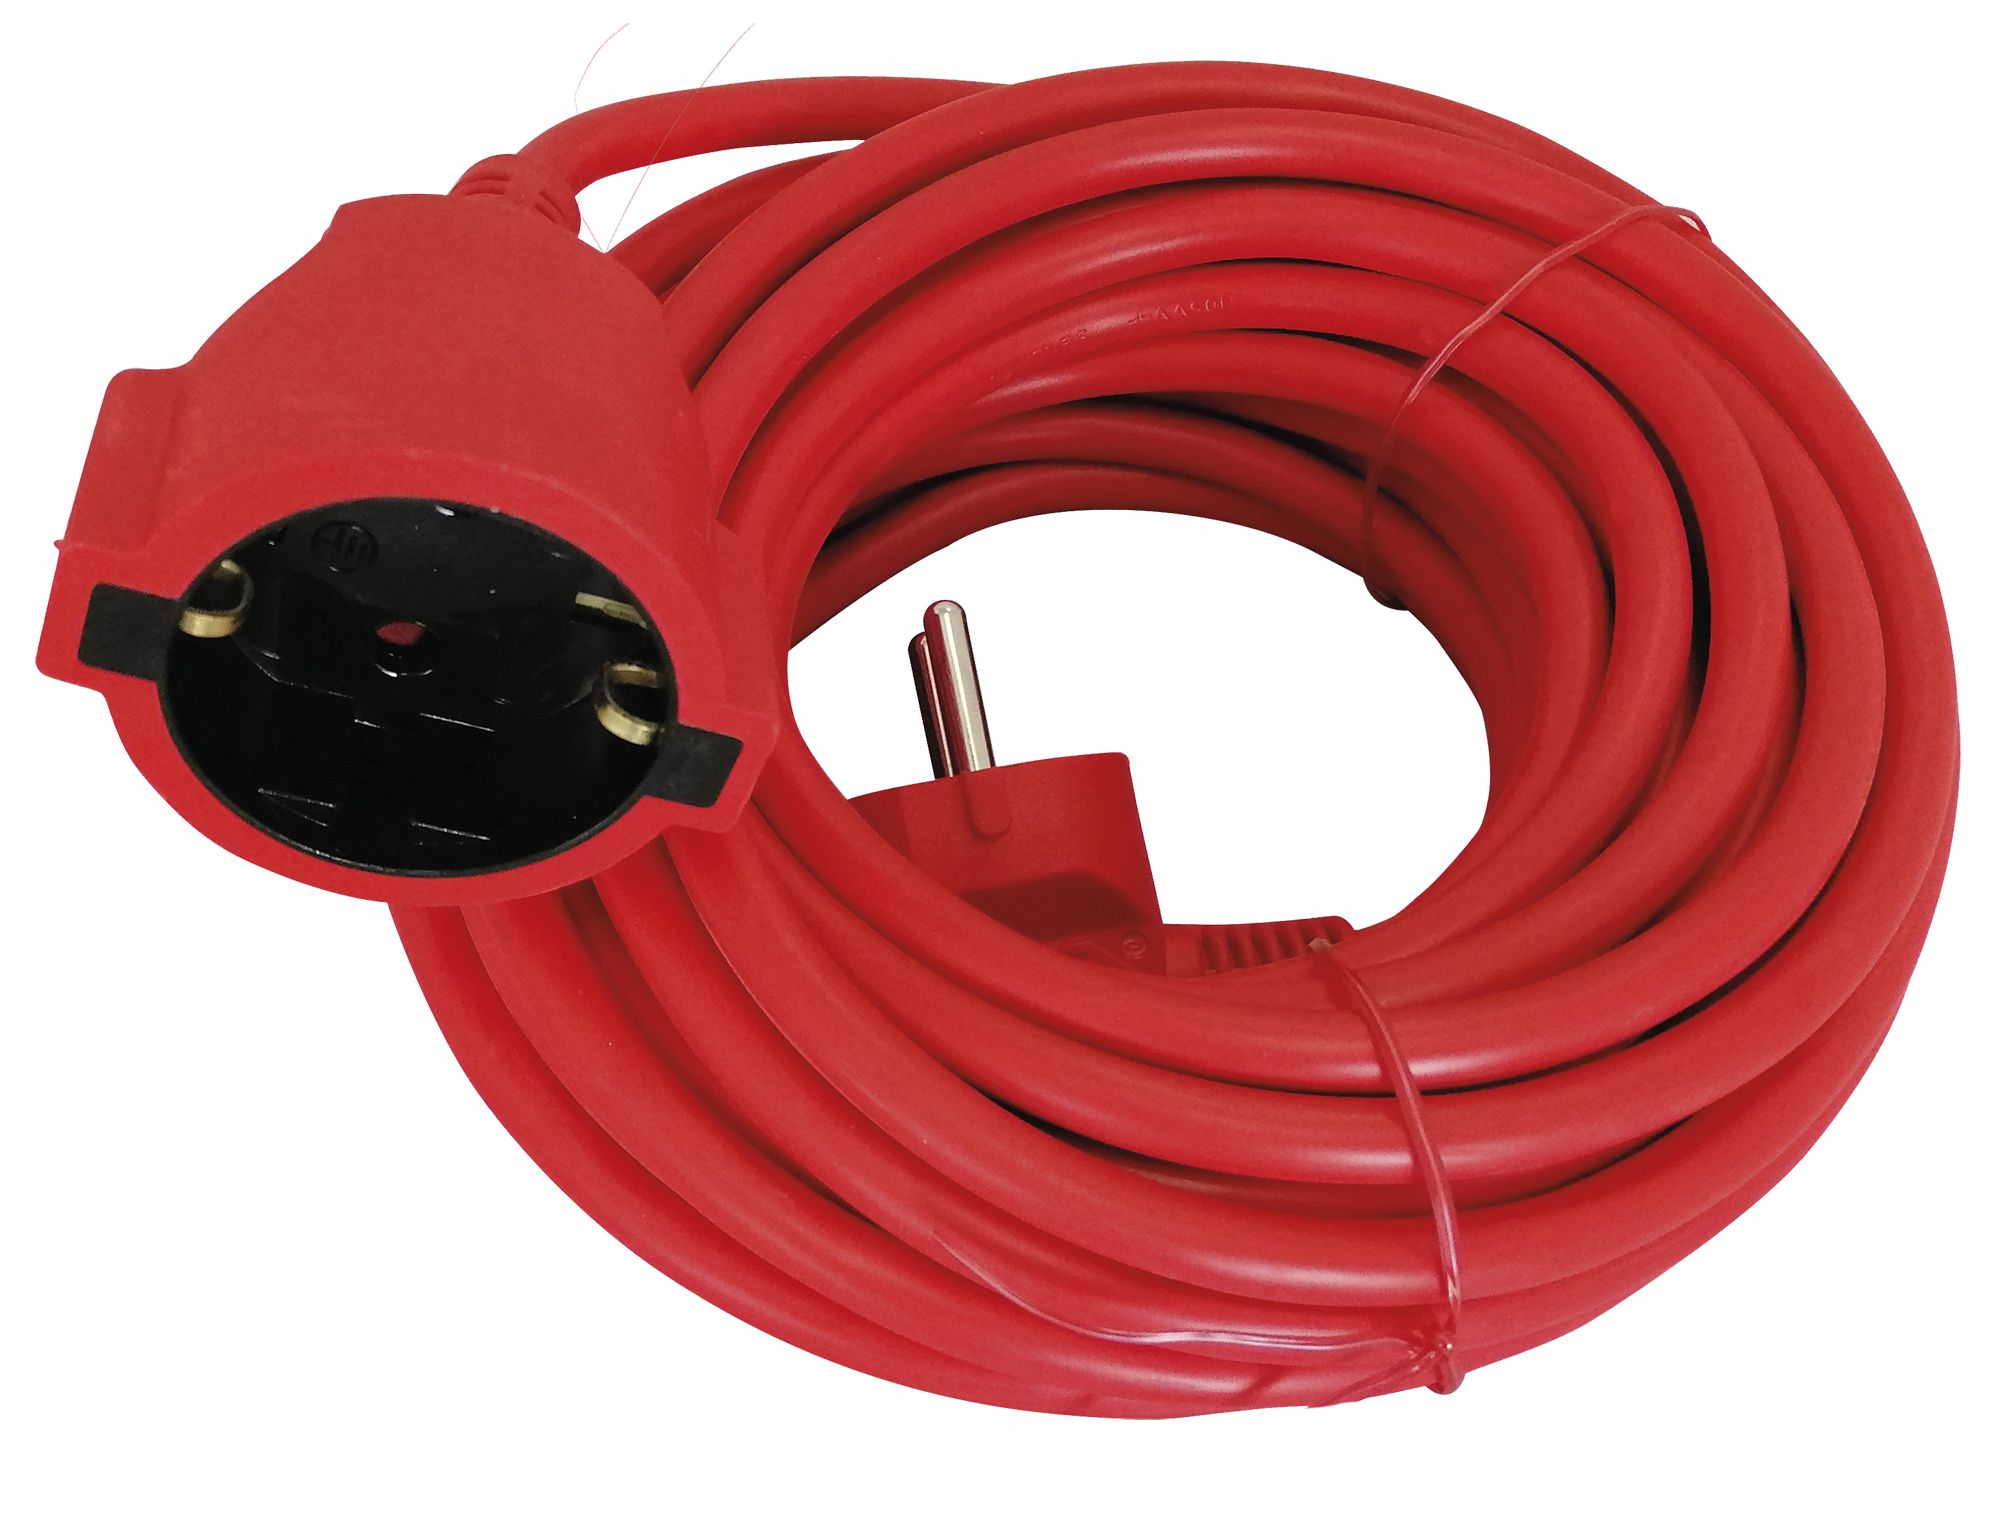 PLIMPO alargador cable 4t. 50 metros (3 x 1,5mm)